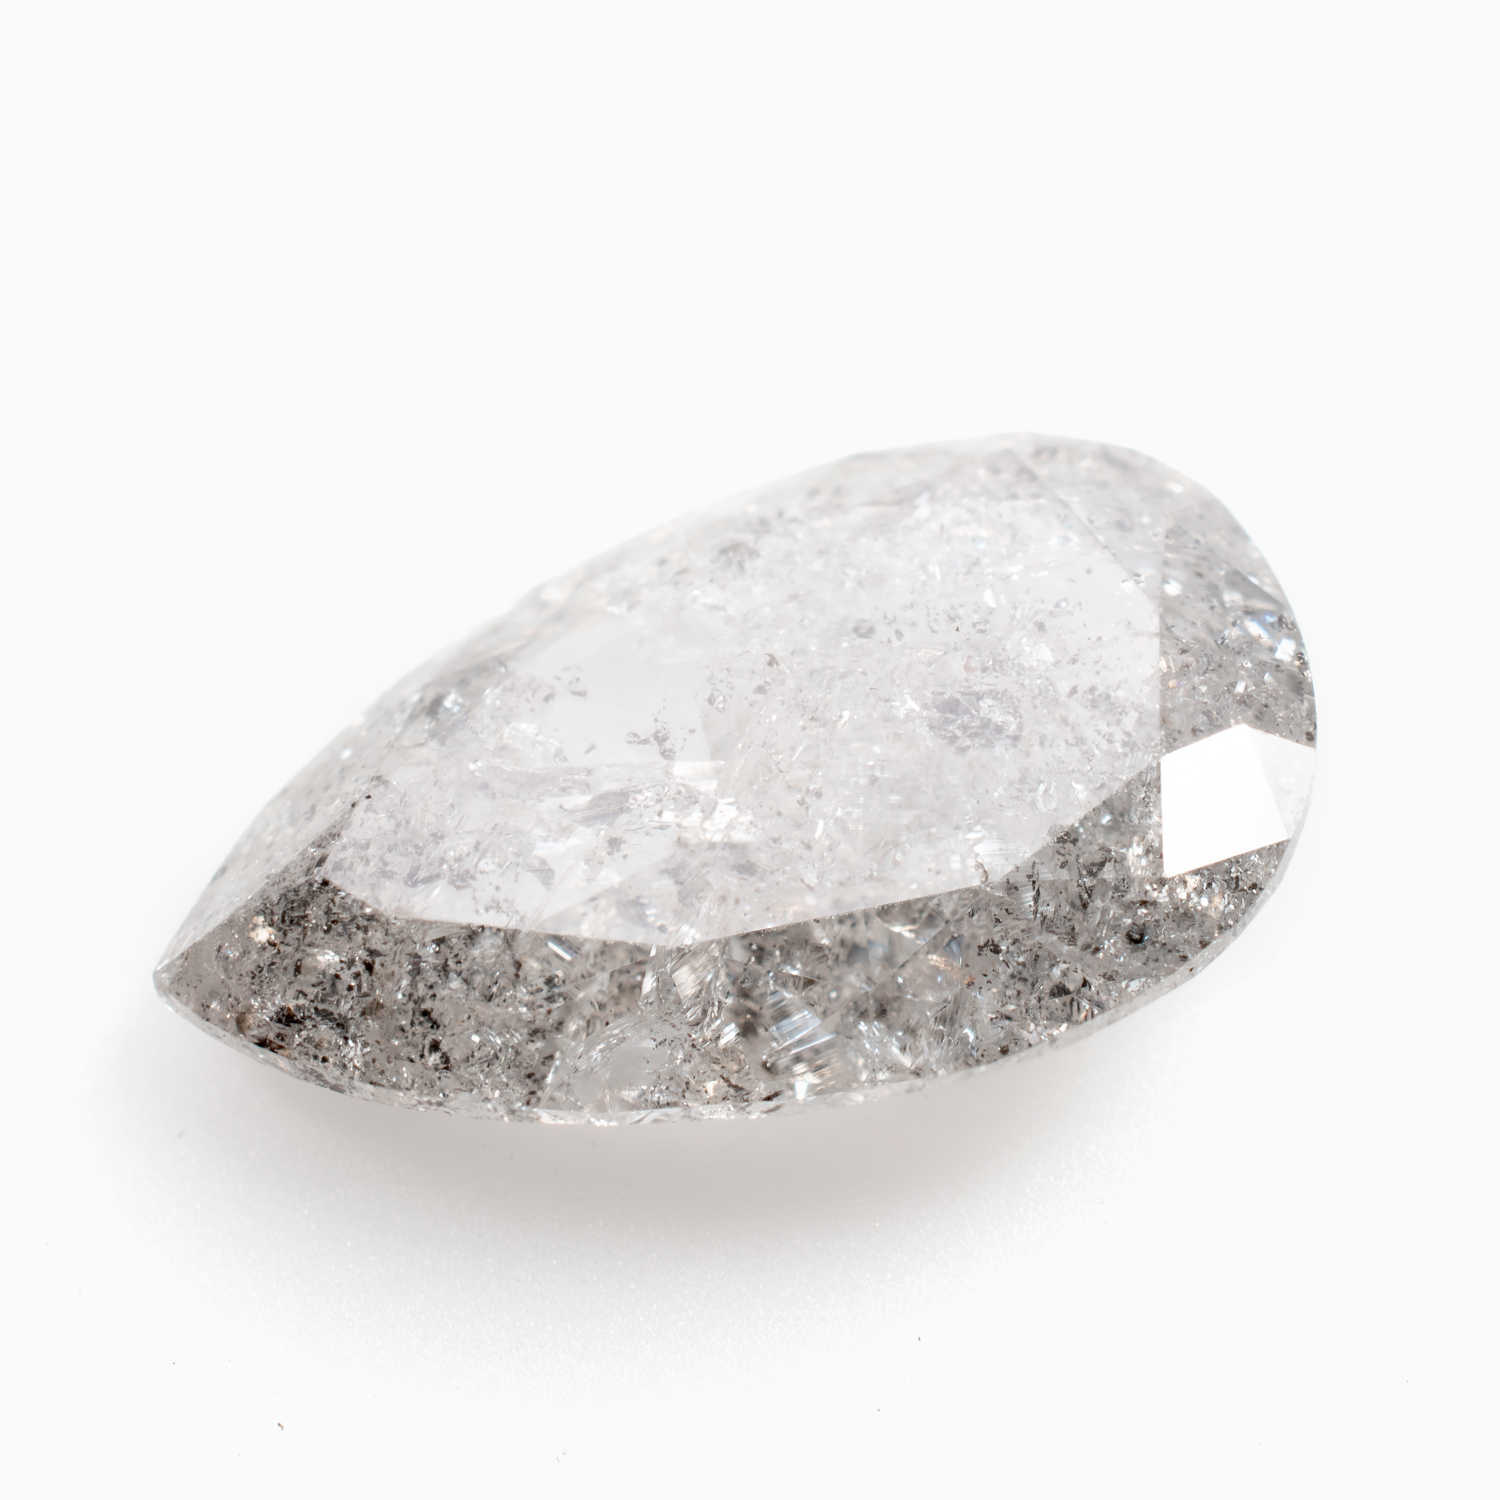 3.64 carat black rough diamond crystal